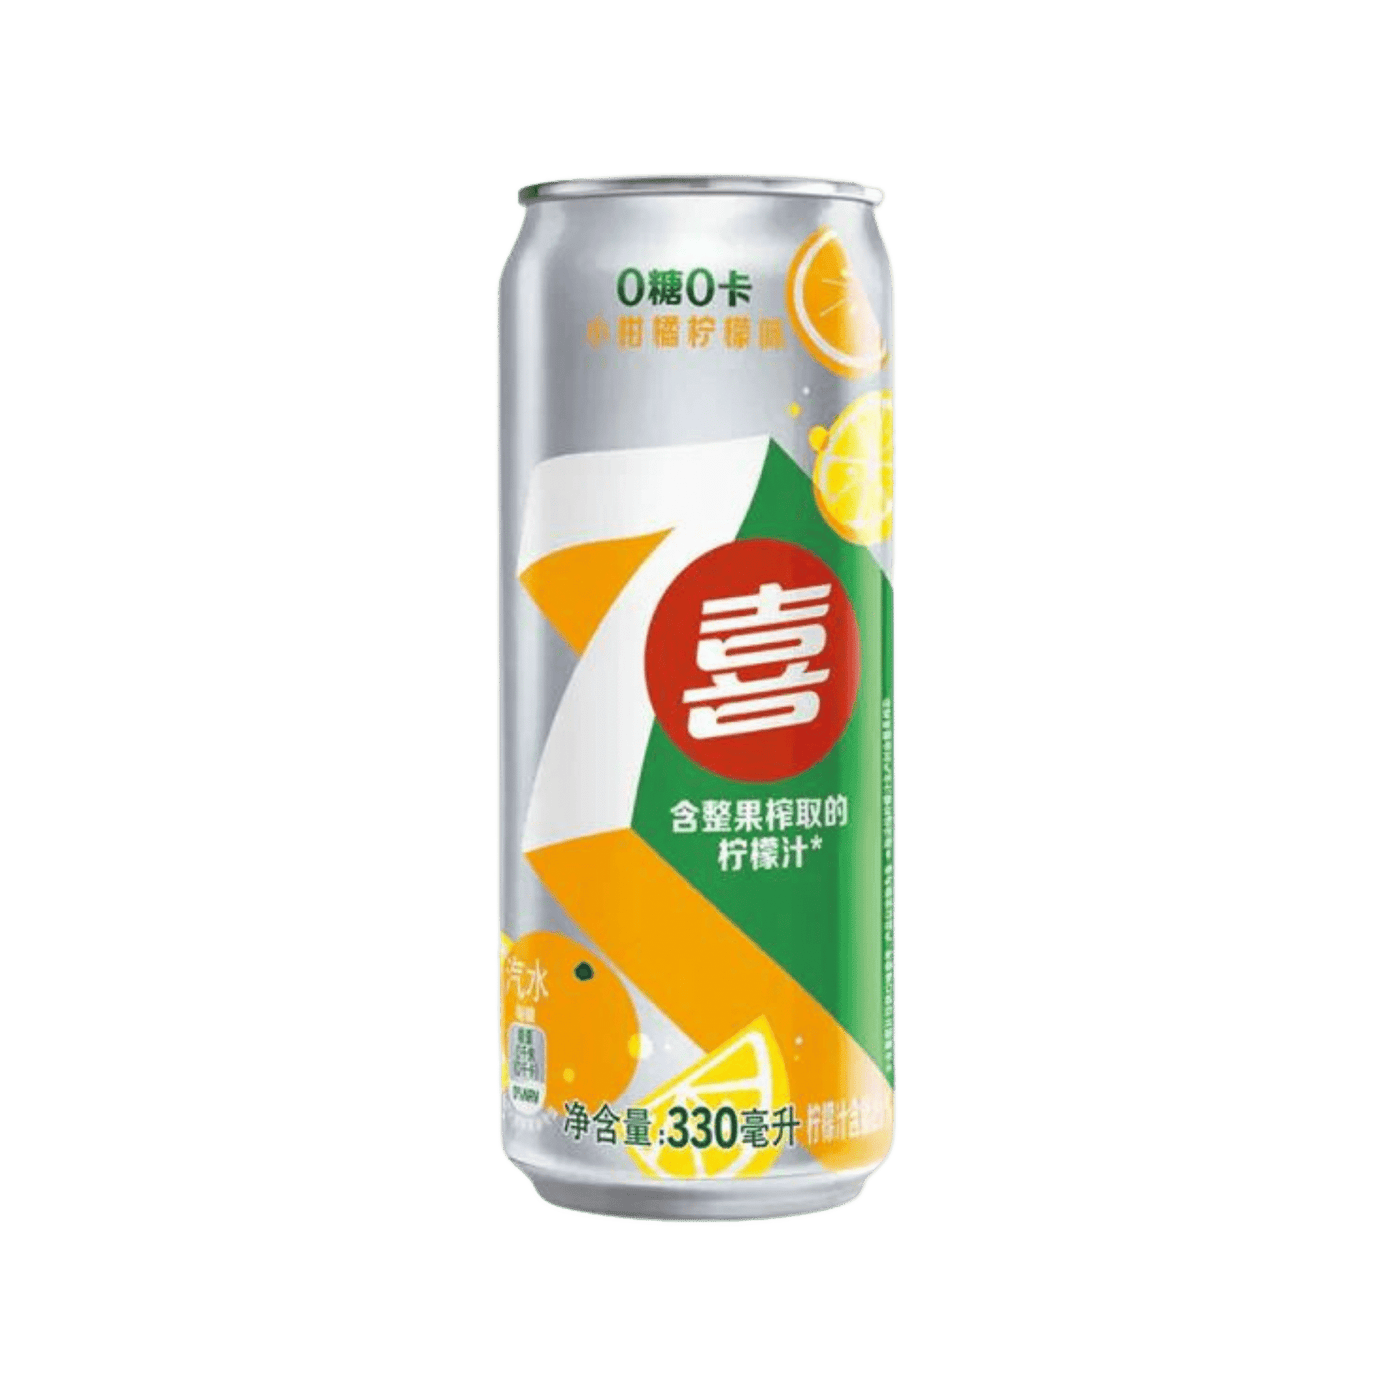 7up - Citrus Lemonade - Asia